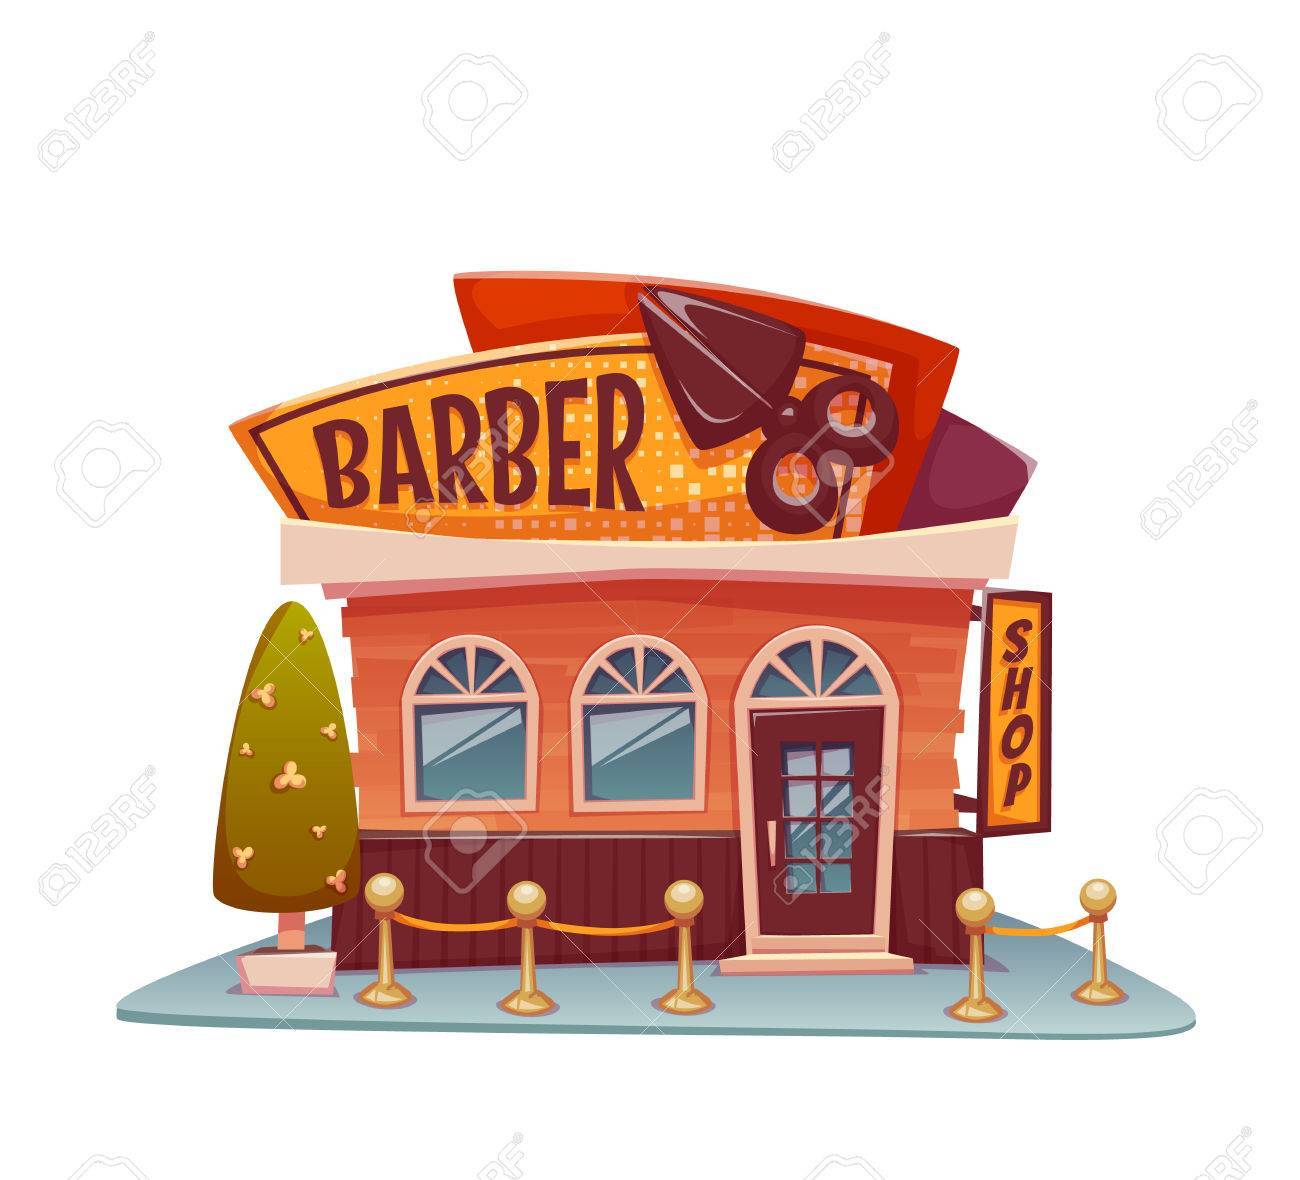 Barber shop building with bright banner. Vector illustration.